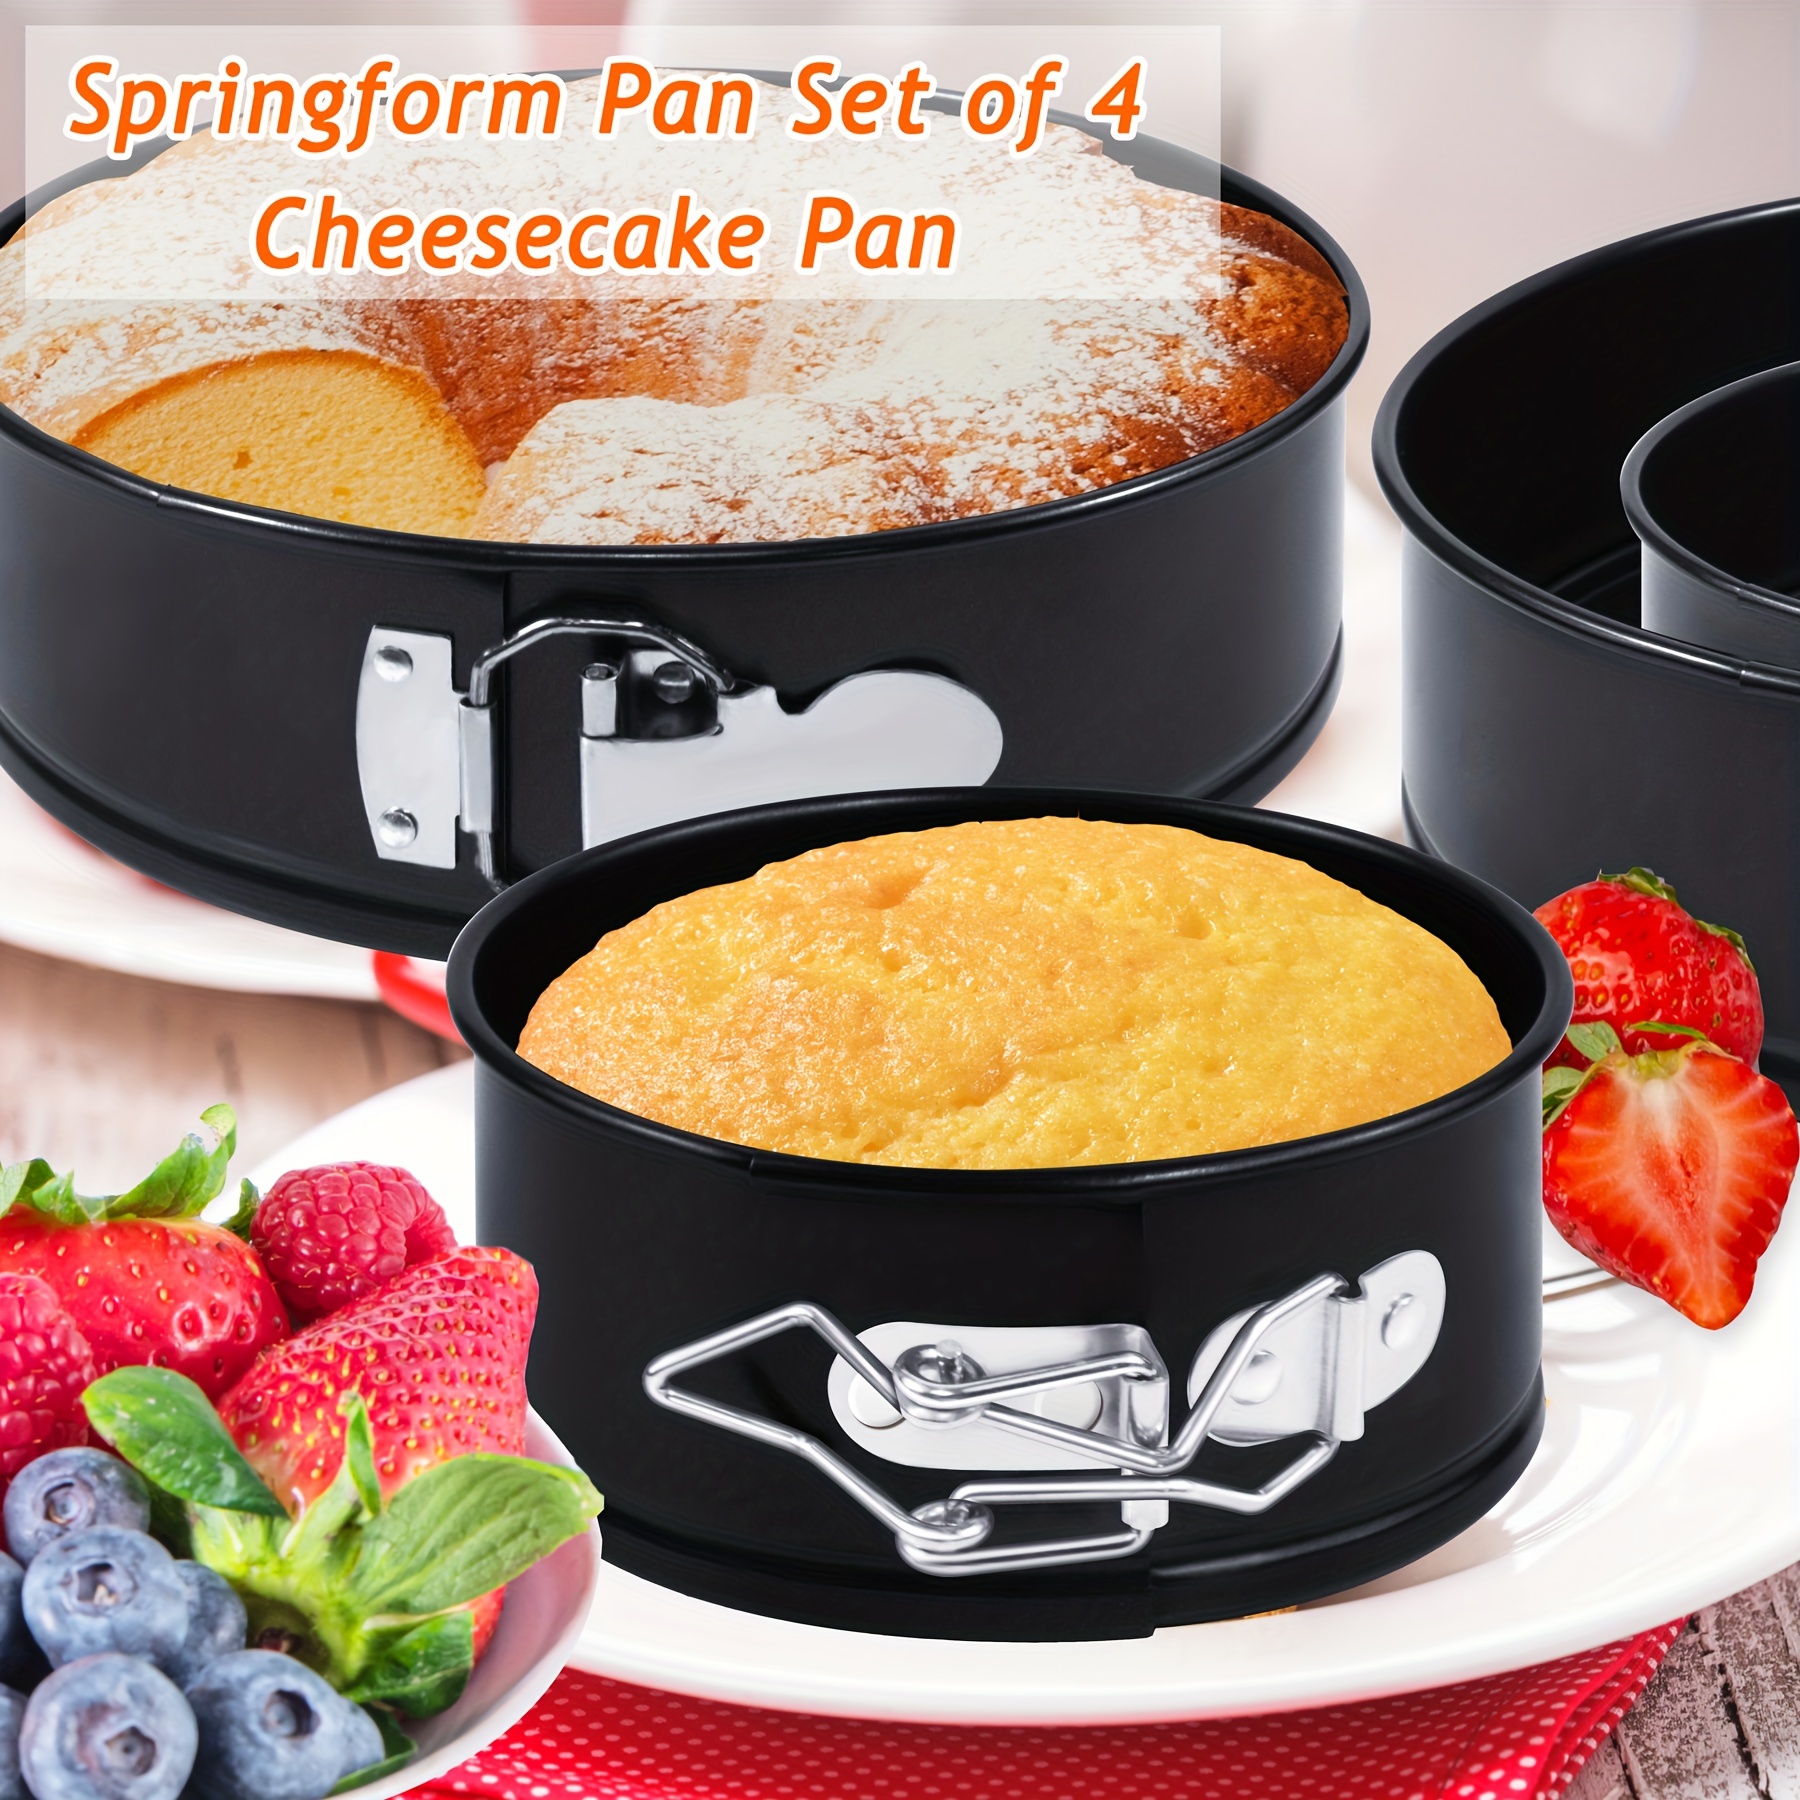 5 Best Springform Pans - Springform Pans for Cheesecake